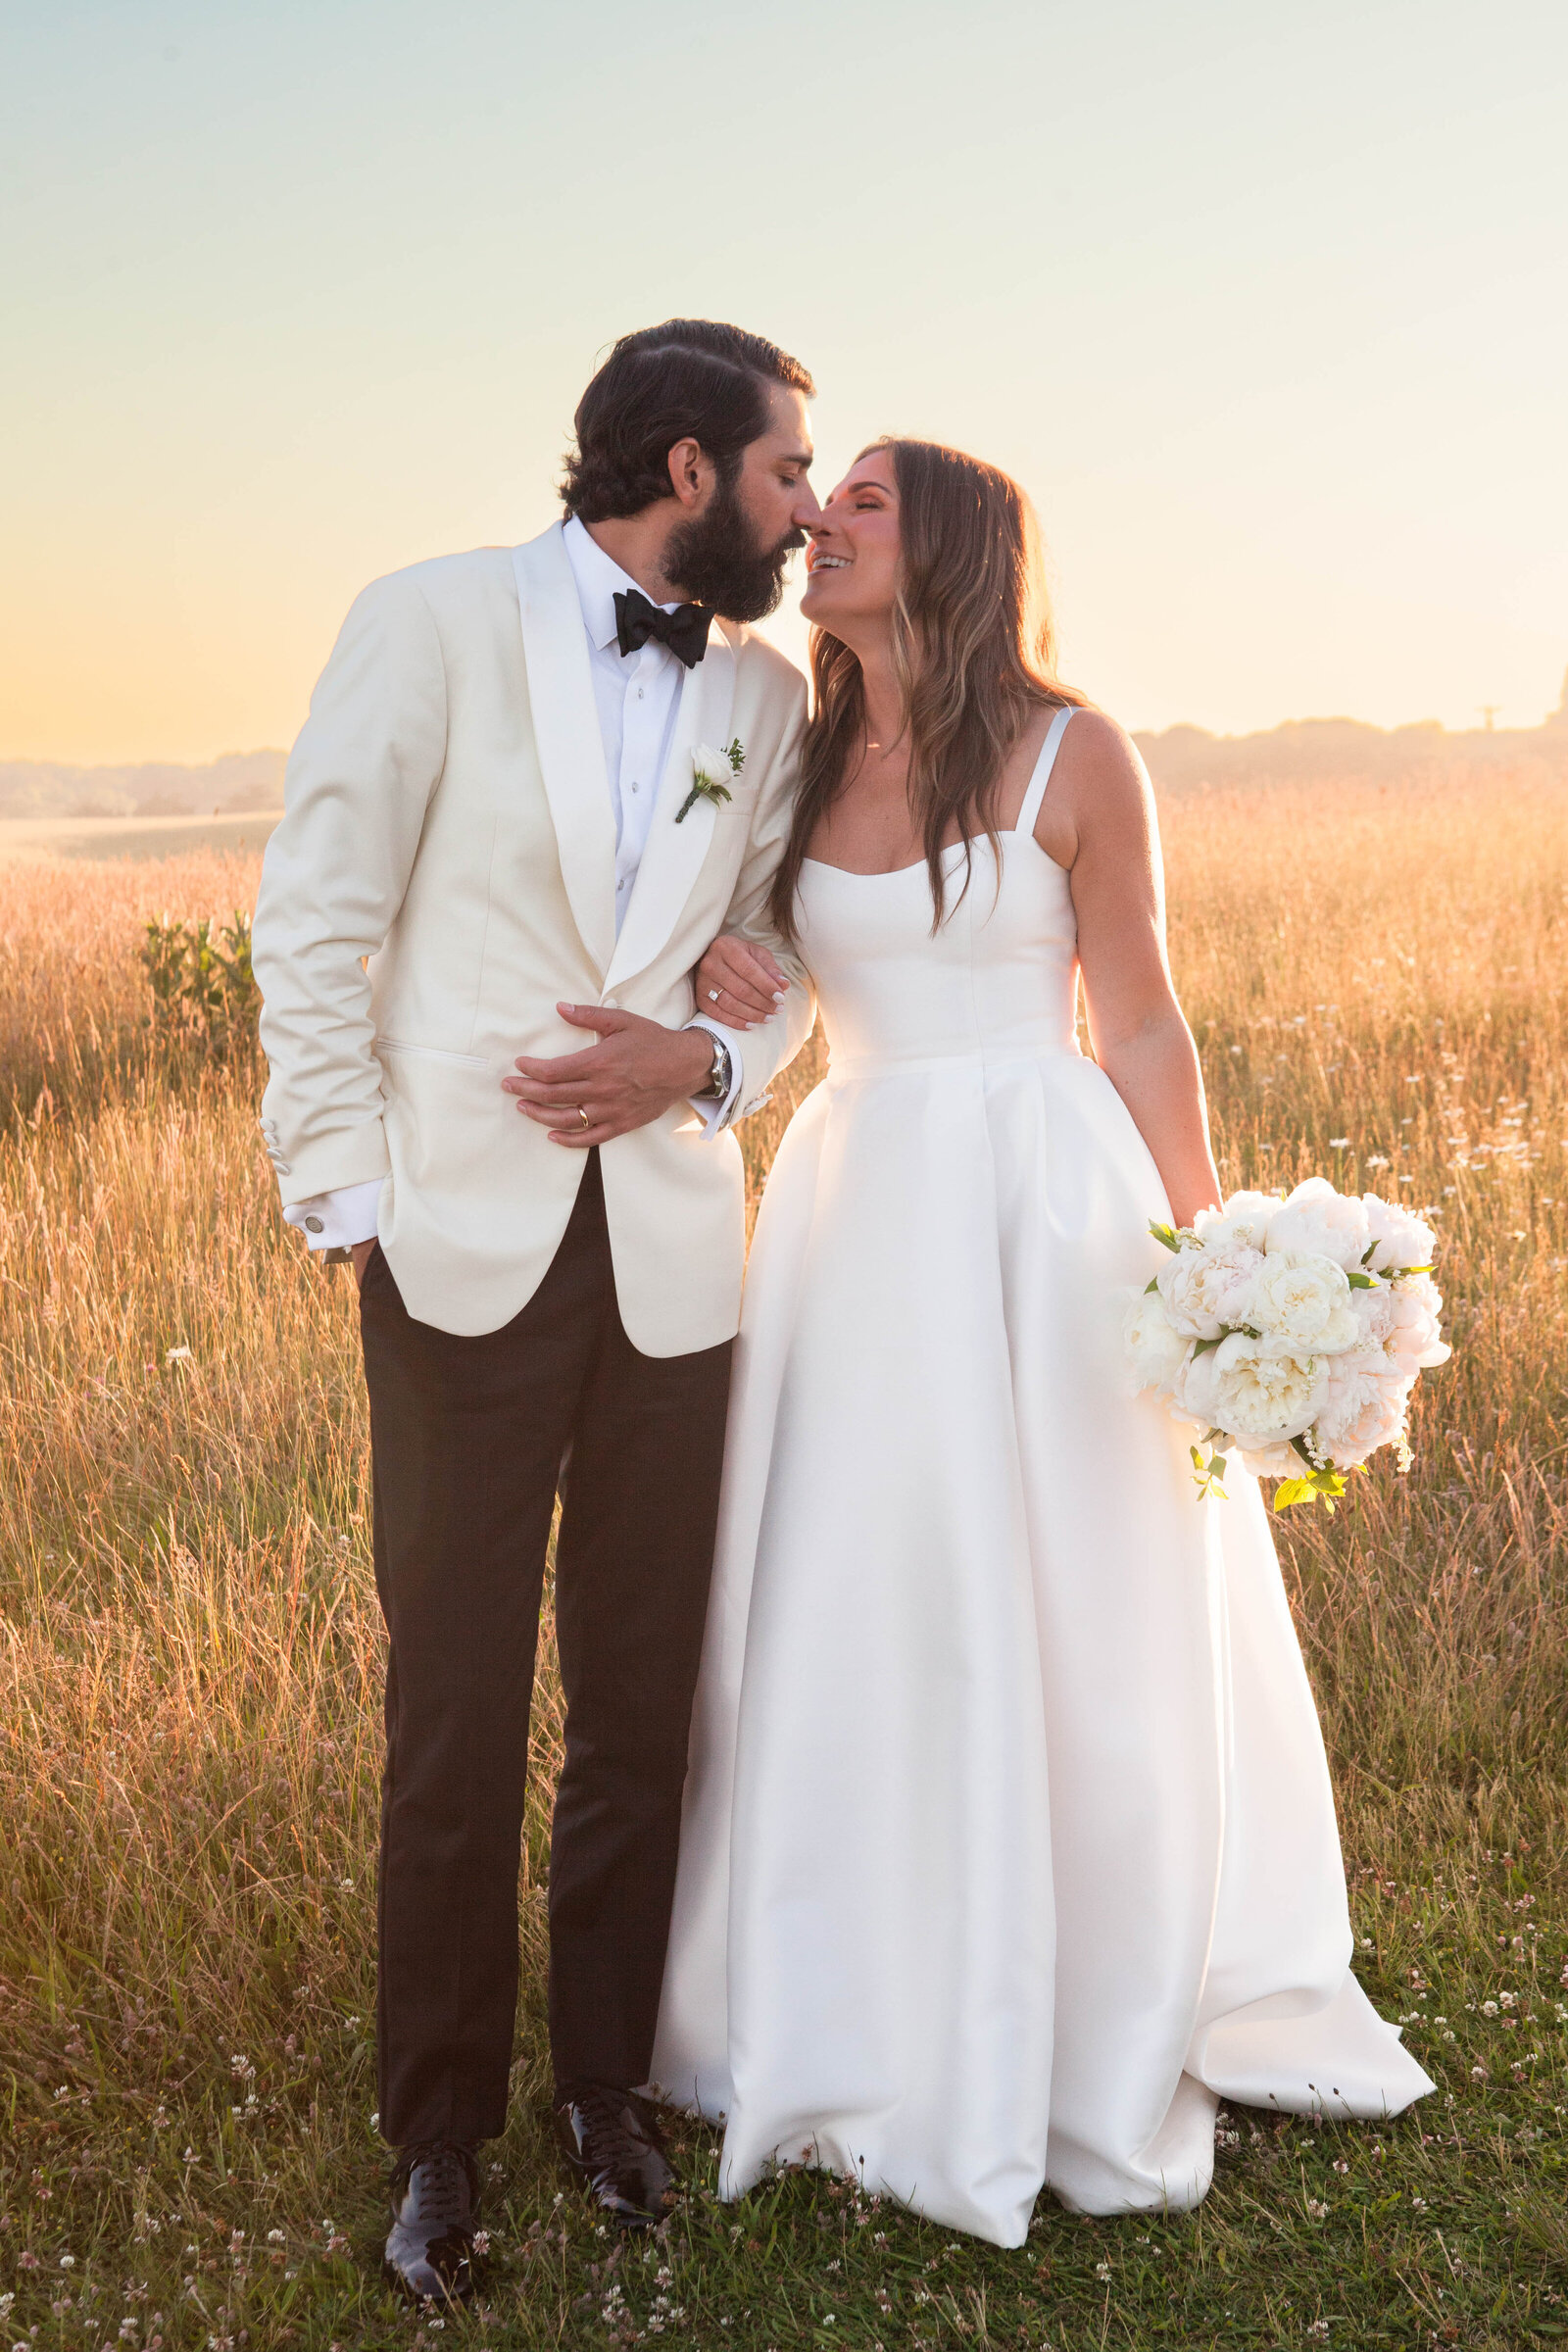 Central Massachusetts Wedding Photographer | Jenna Rose Photography